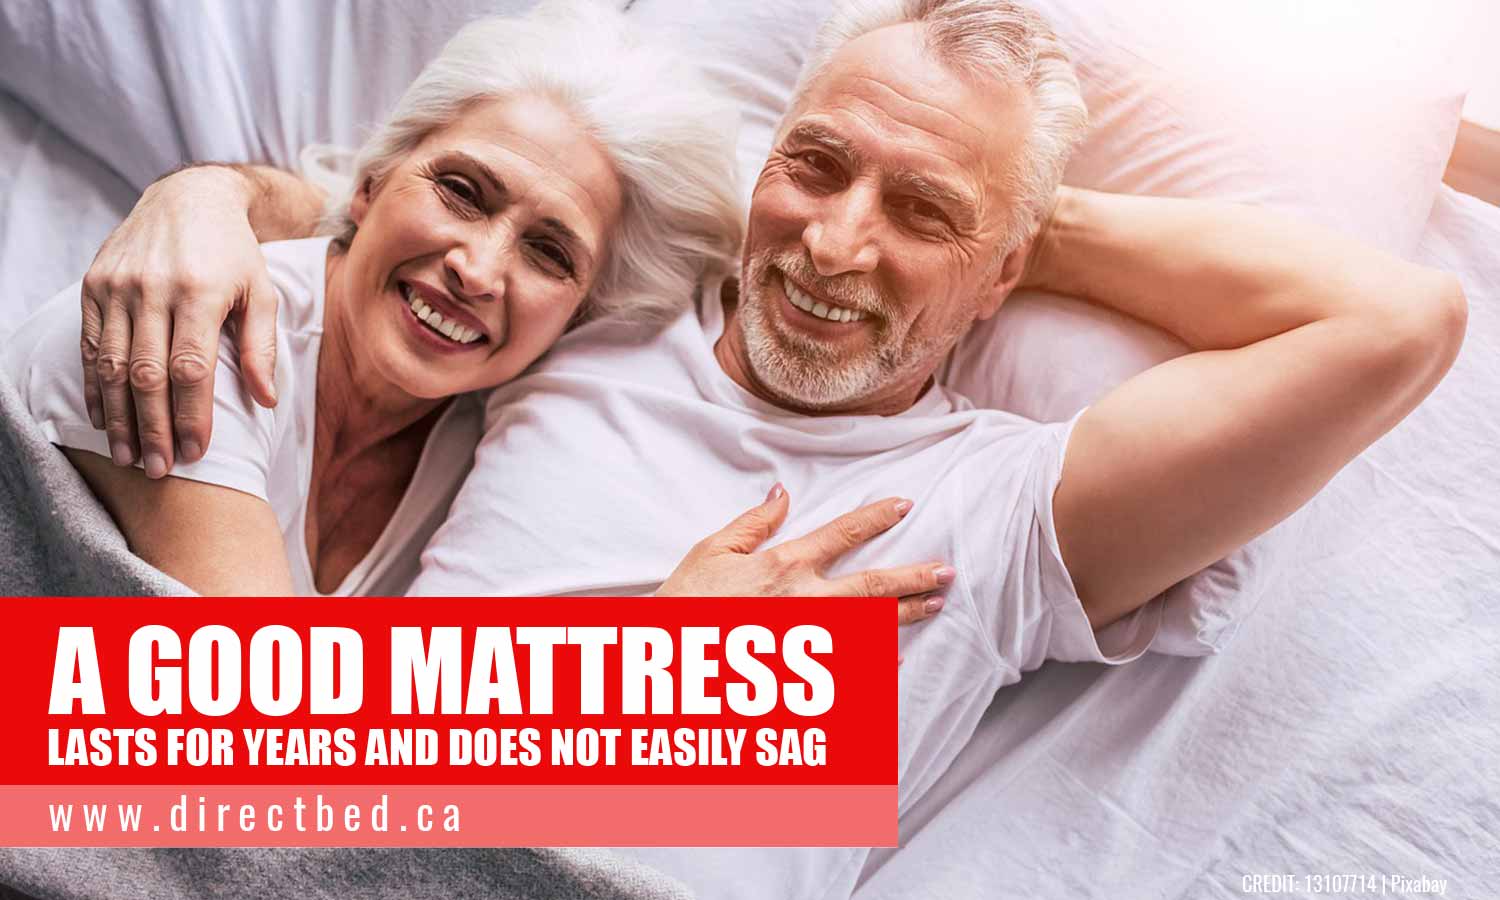 A good mattress lasts 